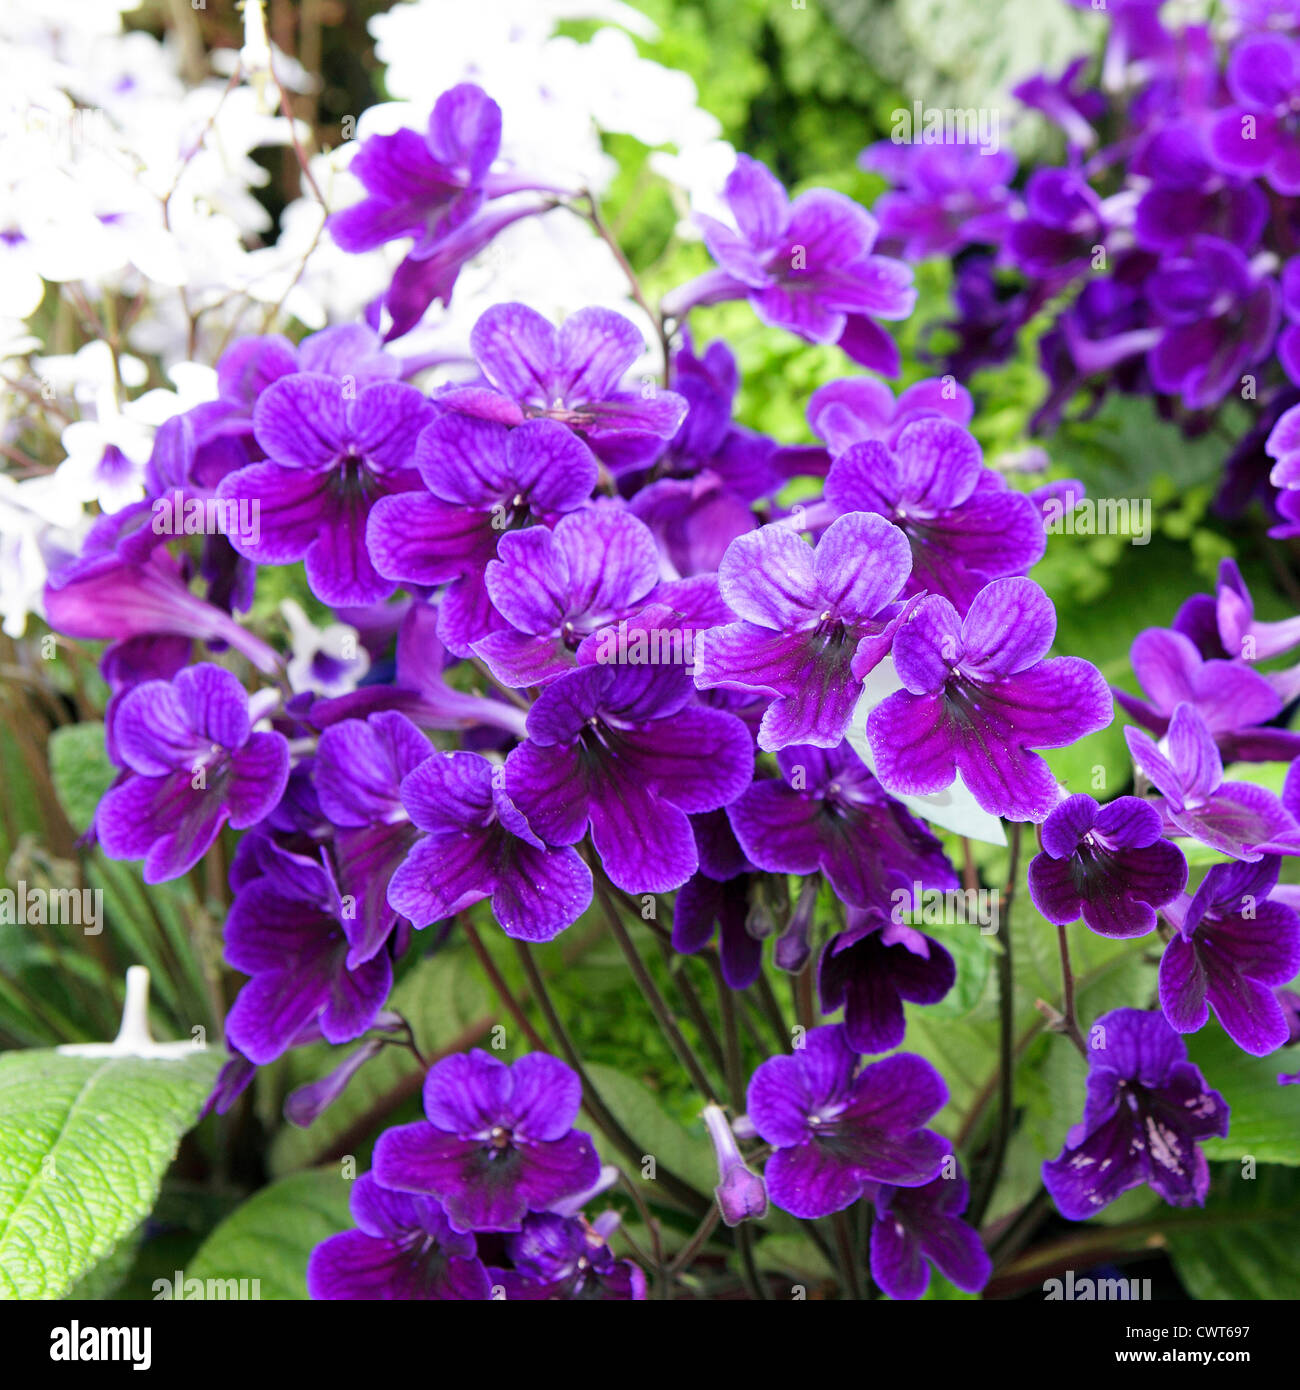 Wonderful examples of Streptocarpus 'Targa' adorned with purple petals and green foliage. Stock Photo